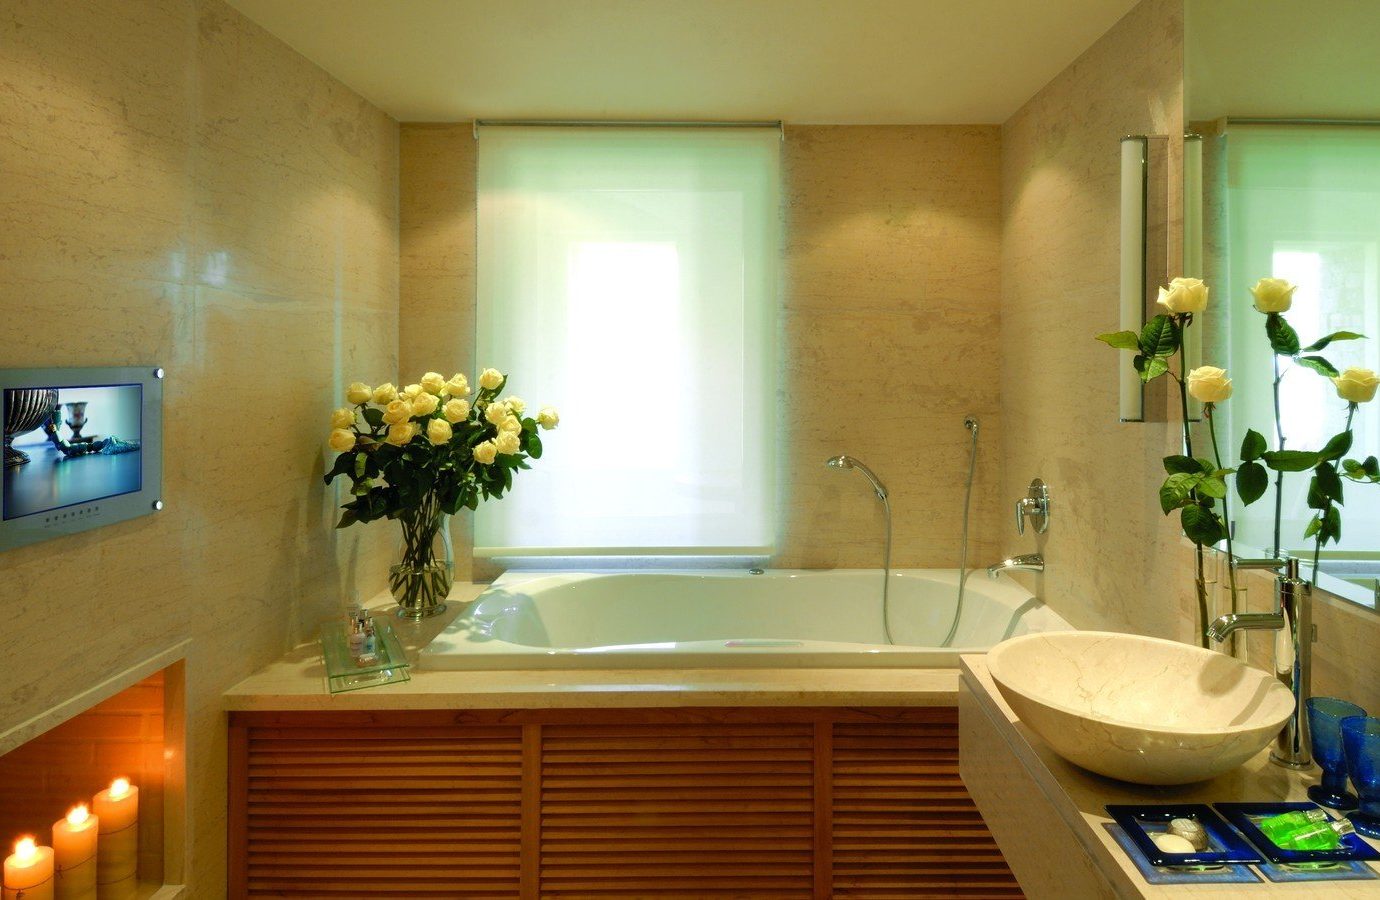 Hotels Luxury Travel wall indoor bathroom room interior design home Suite ceiling estate window daylighting interior designer